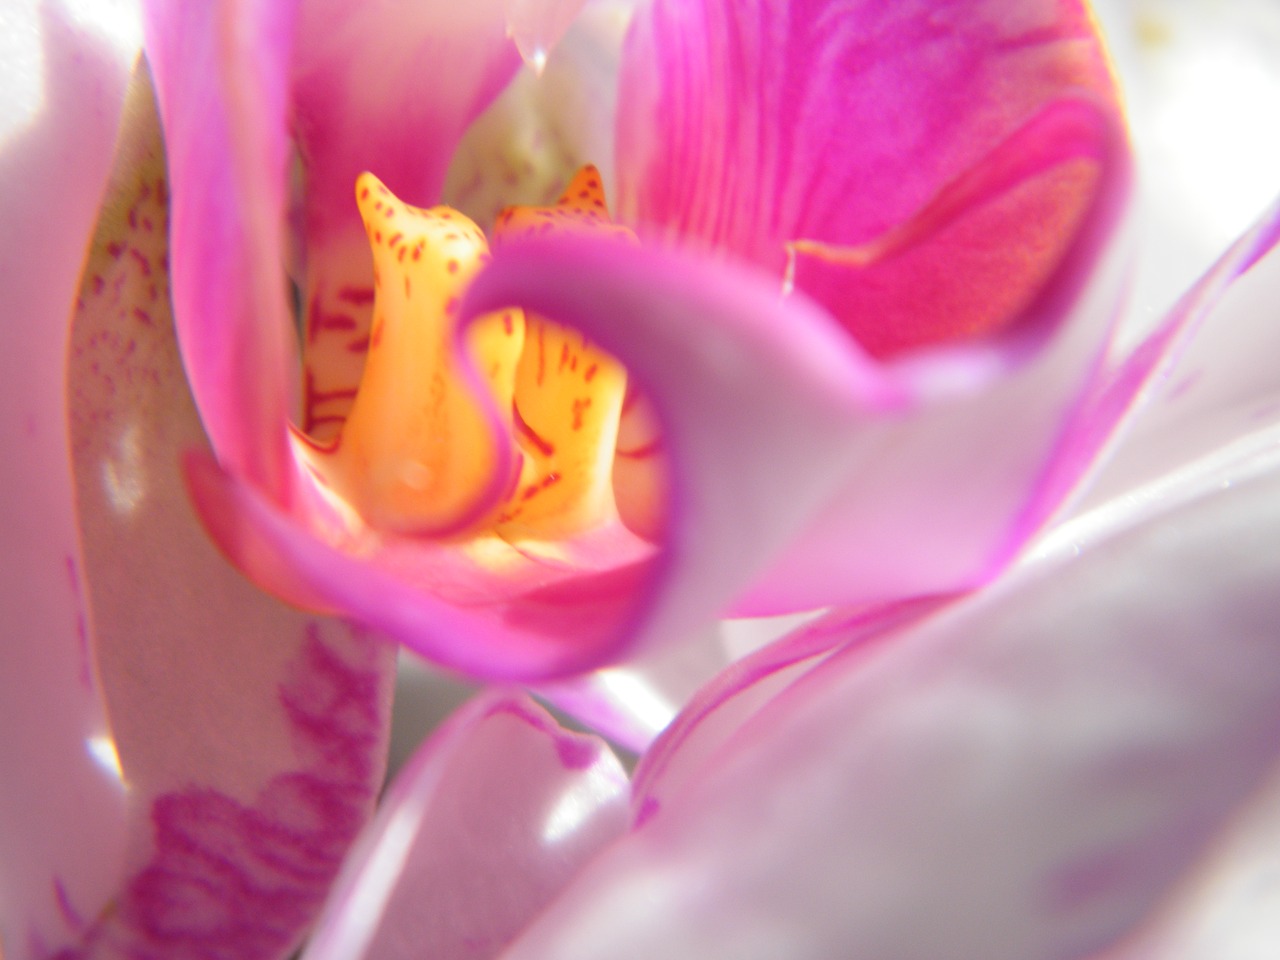 Lilly blossom. Lily Blossom. Орхидейный богомол бело-розовая картинка. Lily Blossom 2014. Lily Blossom model.